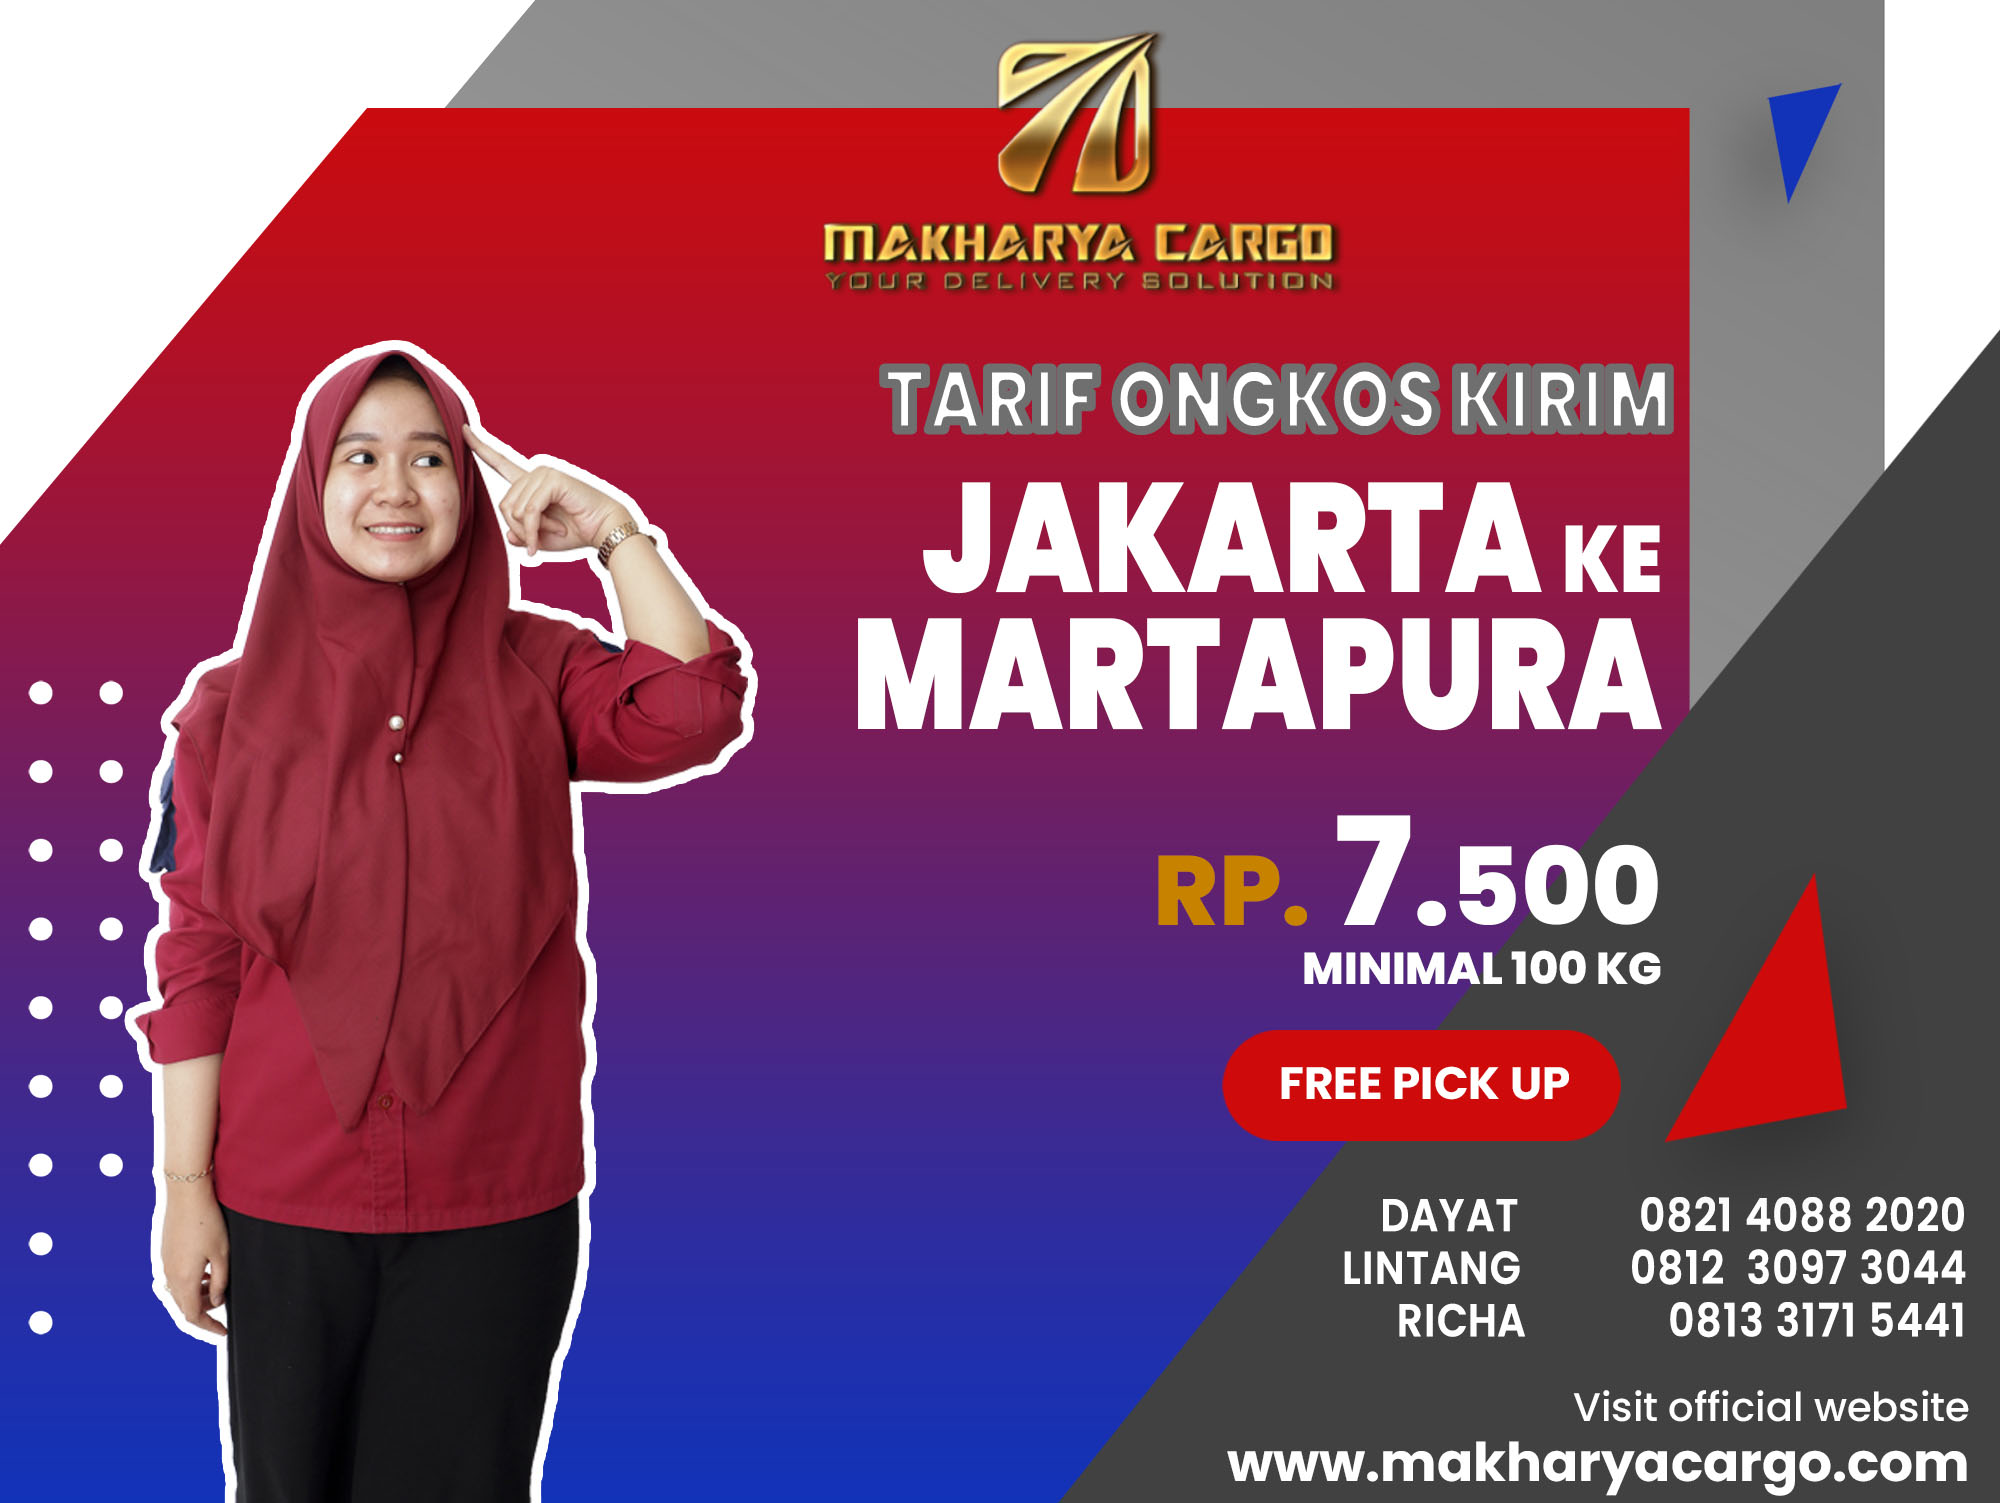 Tarif Ongkos Kirim Jakarta Martapura